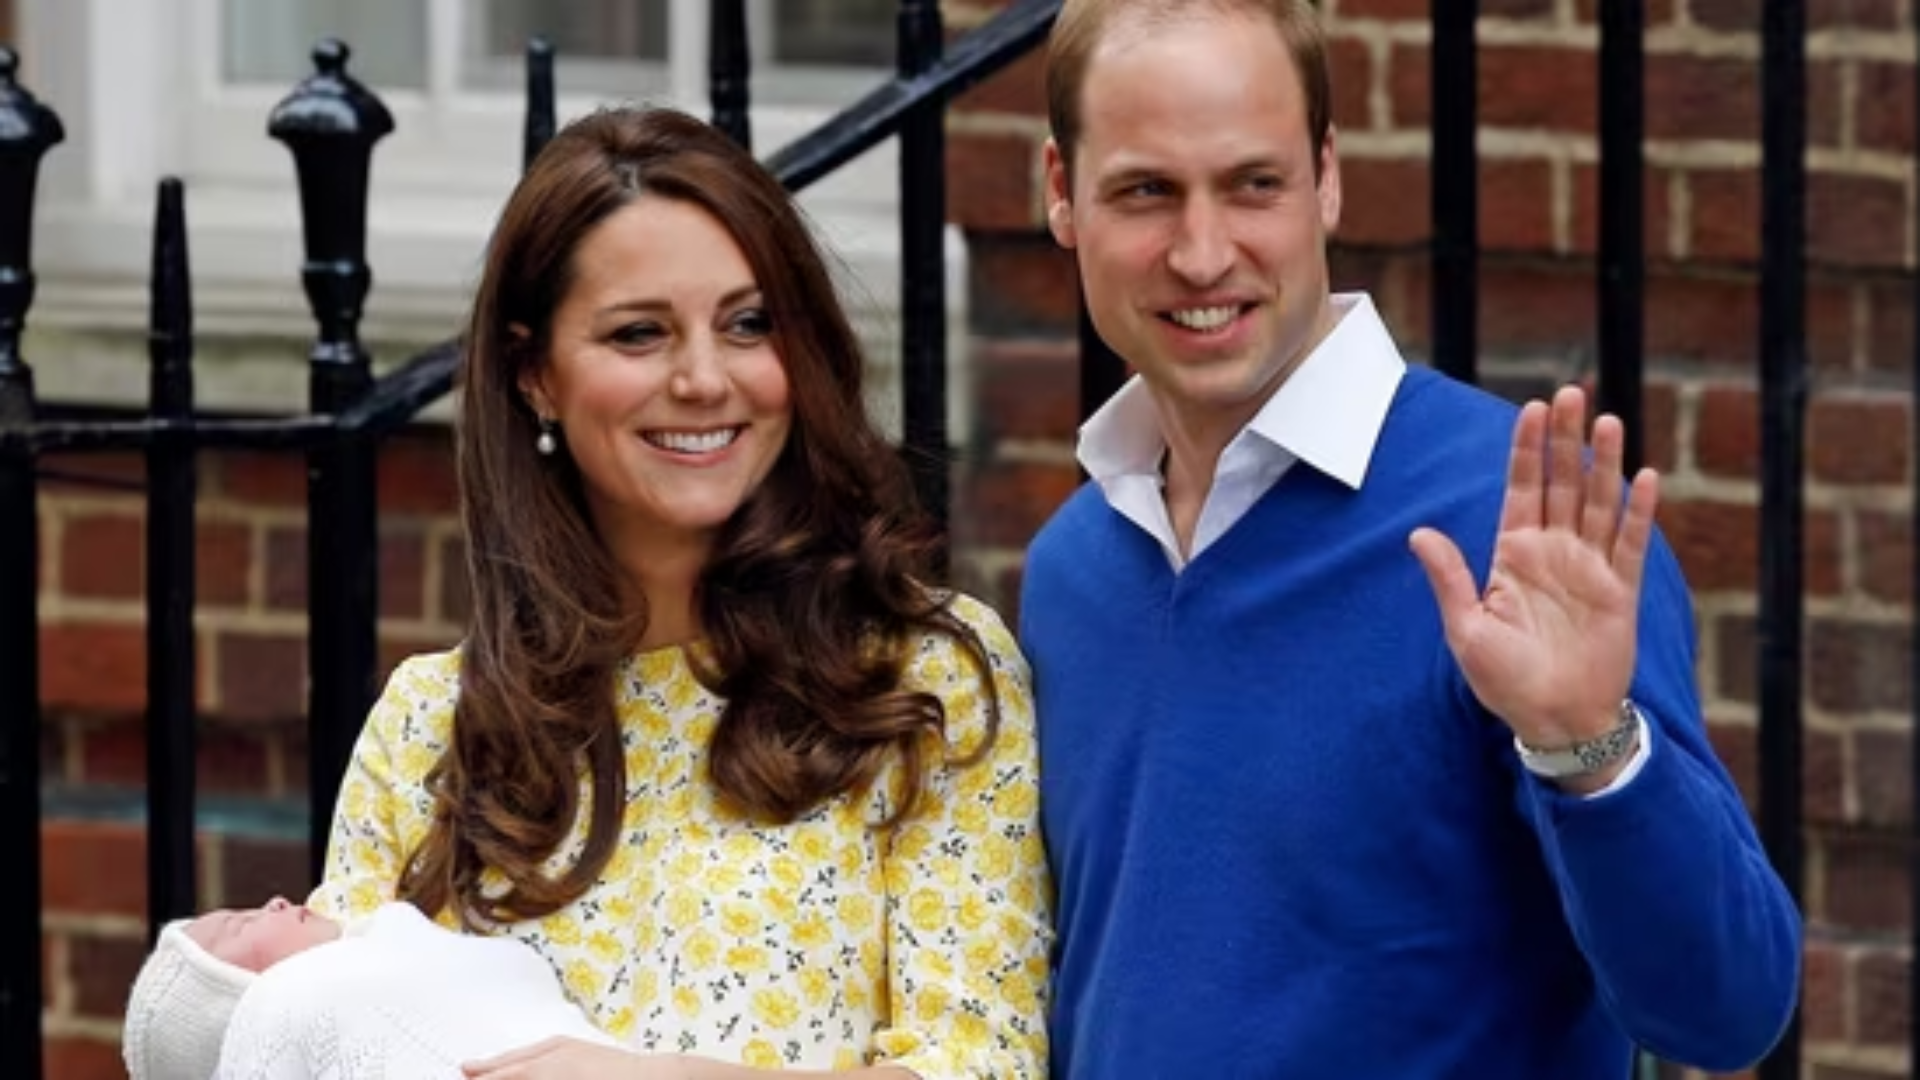 Prince William Updates On Kate Middleton’s Cancer Battle At D-Day Commemoration, 